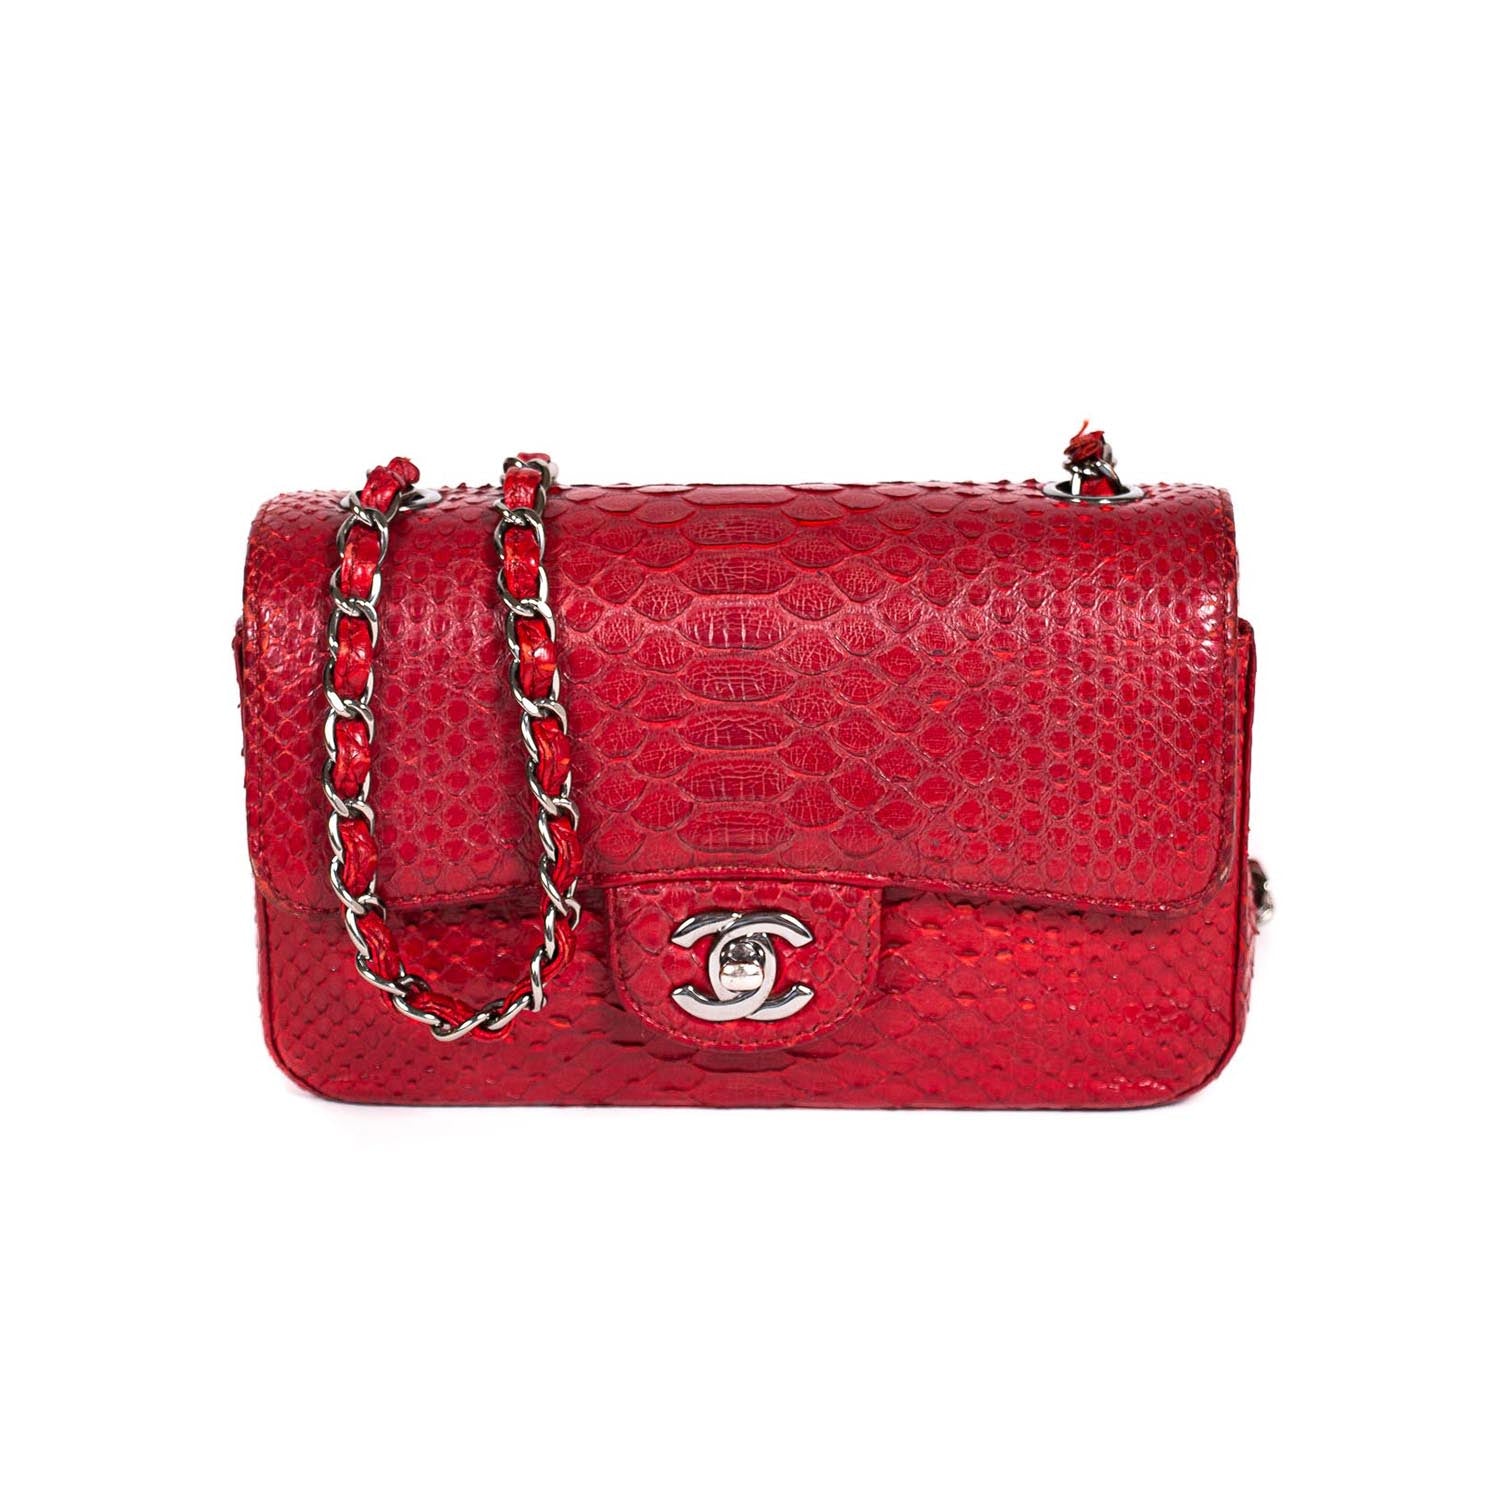 Shop authentic Chanel New Mini Classic Python Flap Bag at revogue